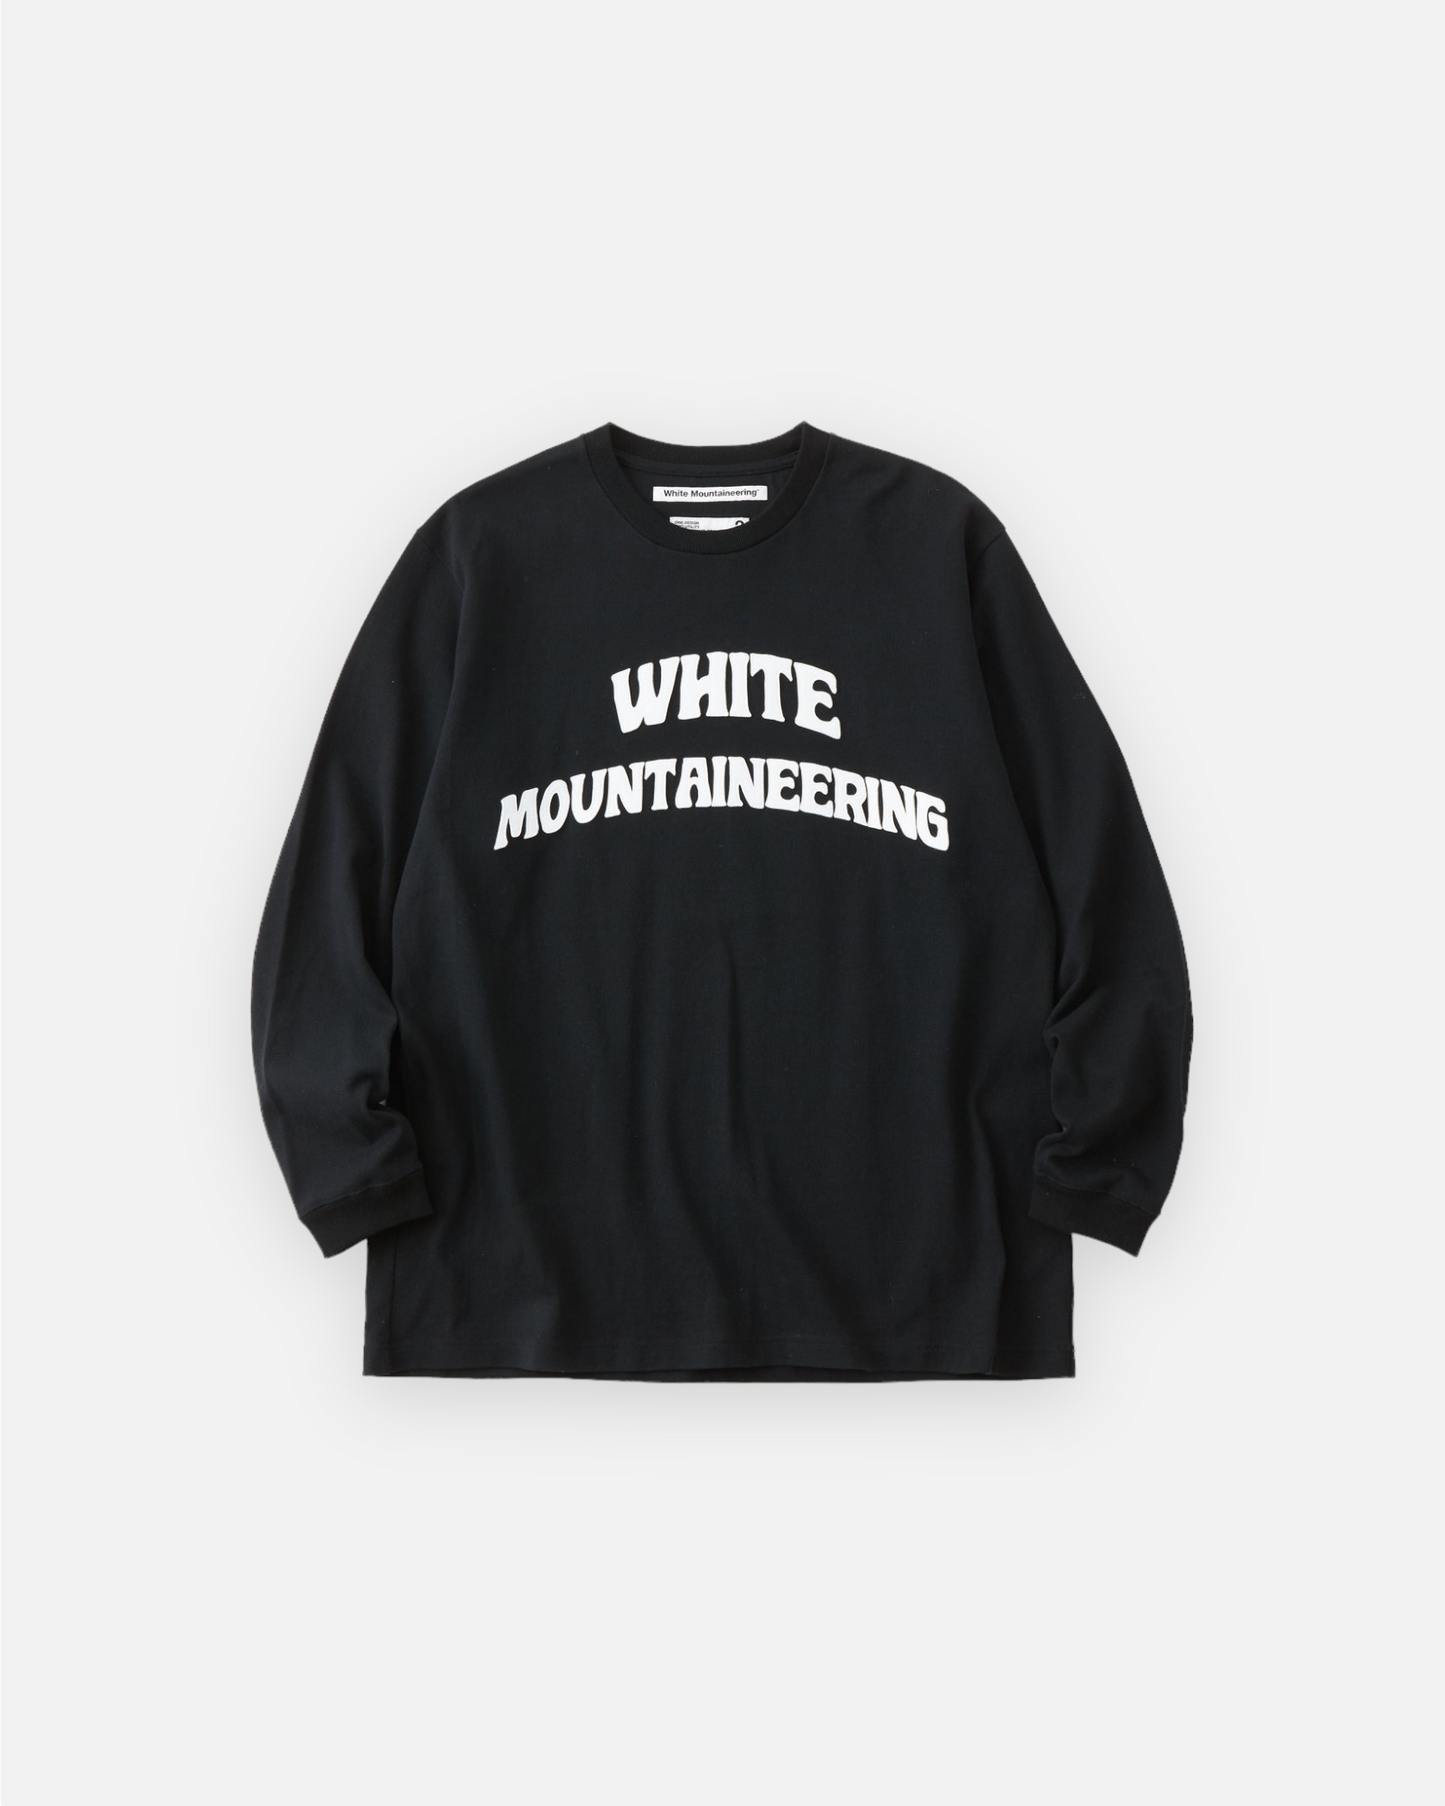 WHITE MOUNTAINEERING LOGO APPLIQUED L/S T-SHIRT (BLACK)